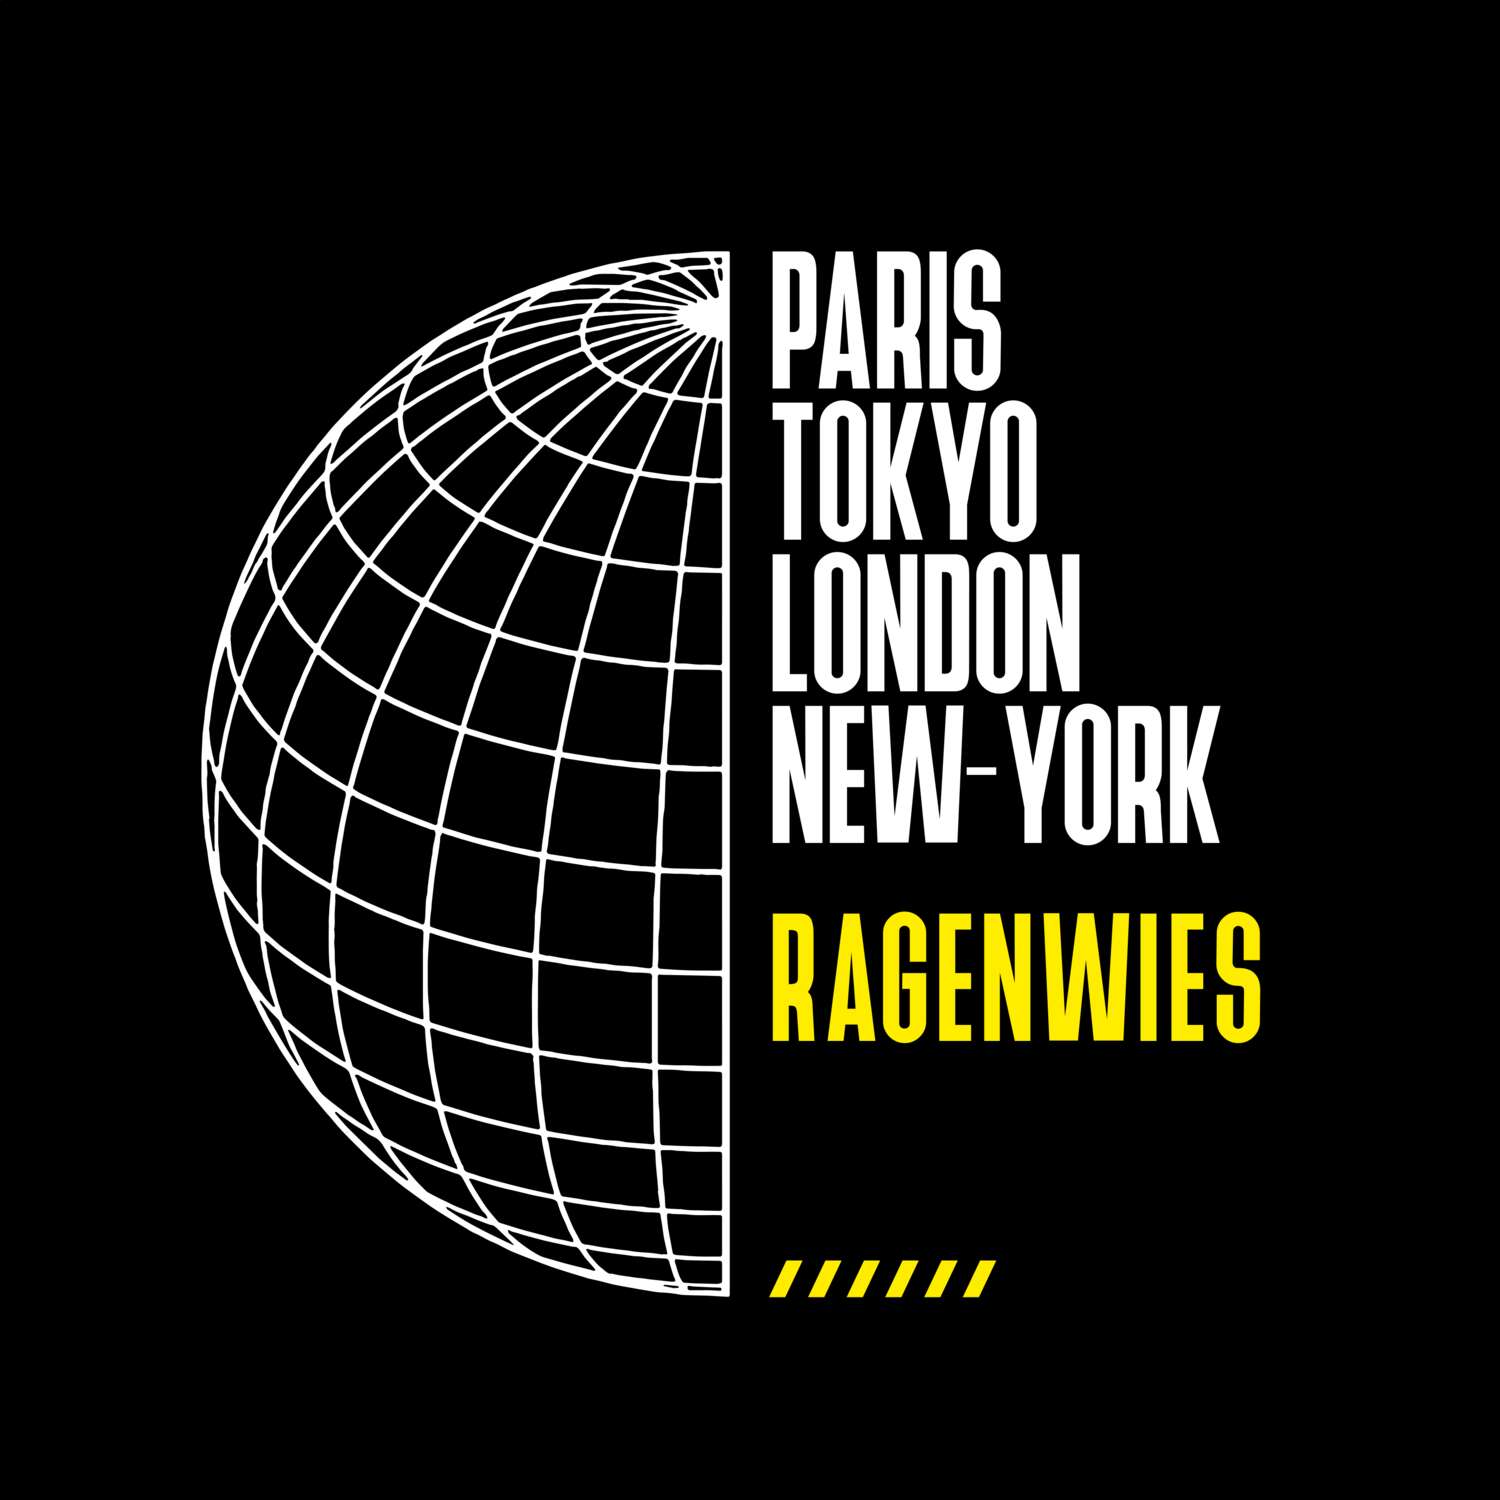 Ragenwies T-Shirt »Paris Tokyo London«